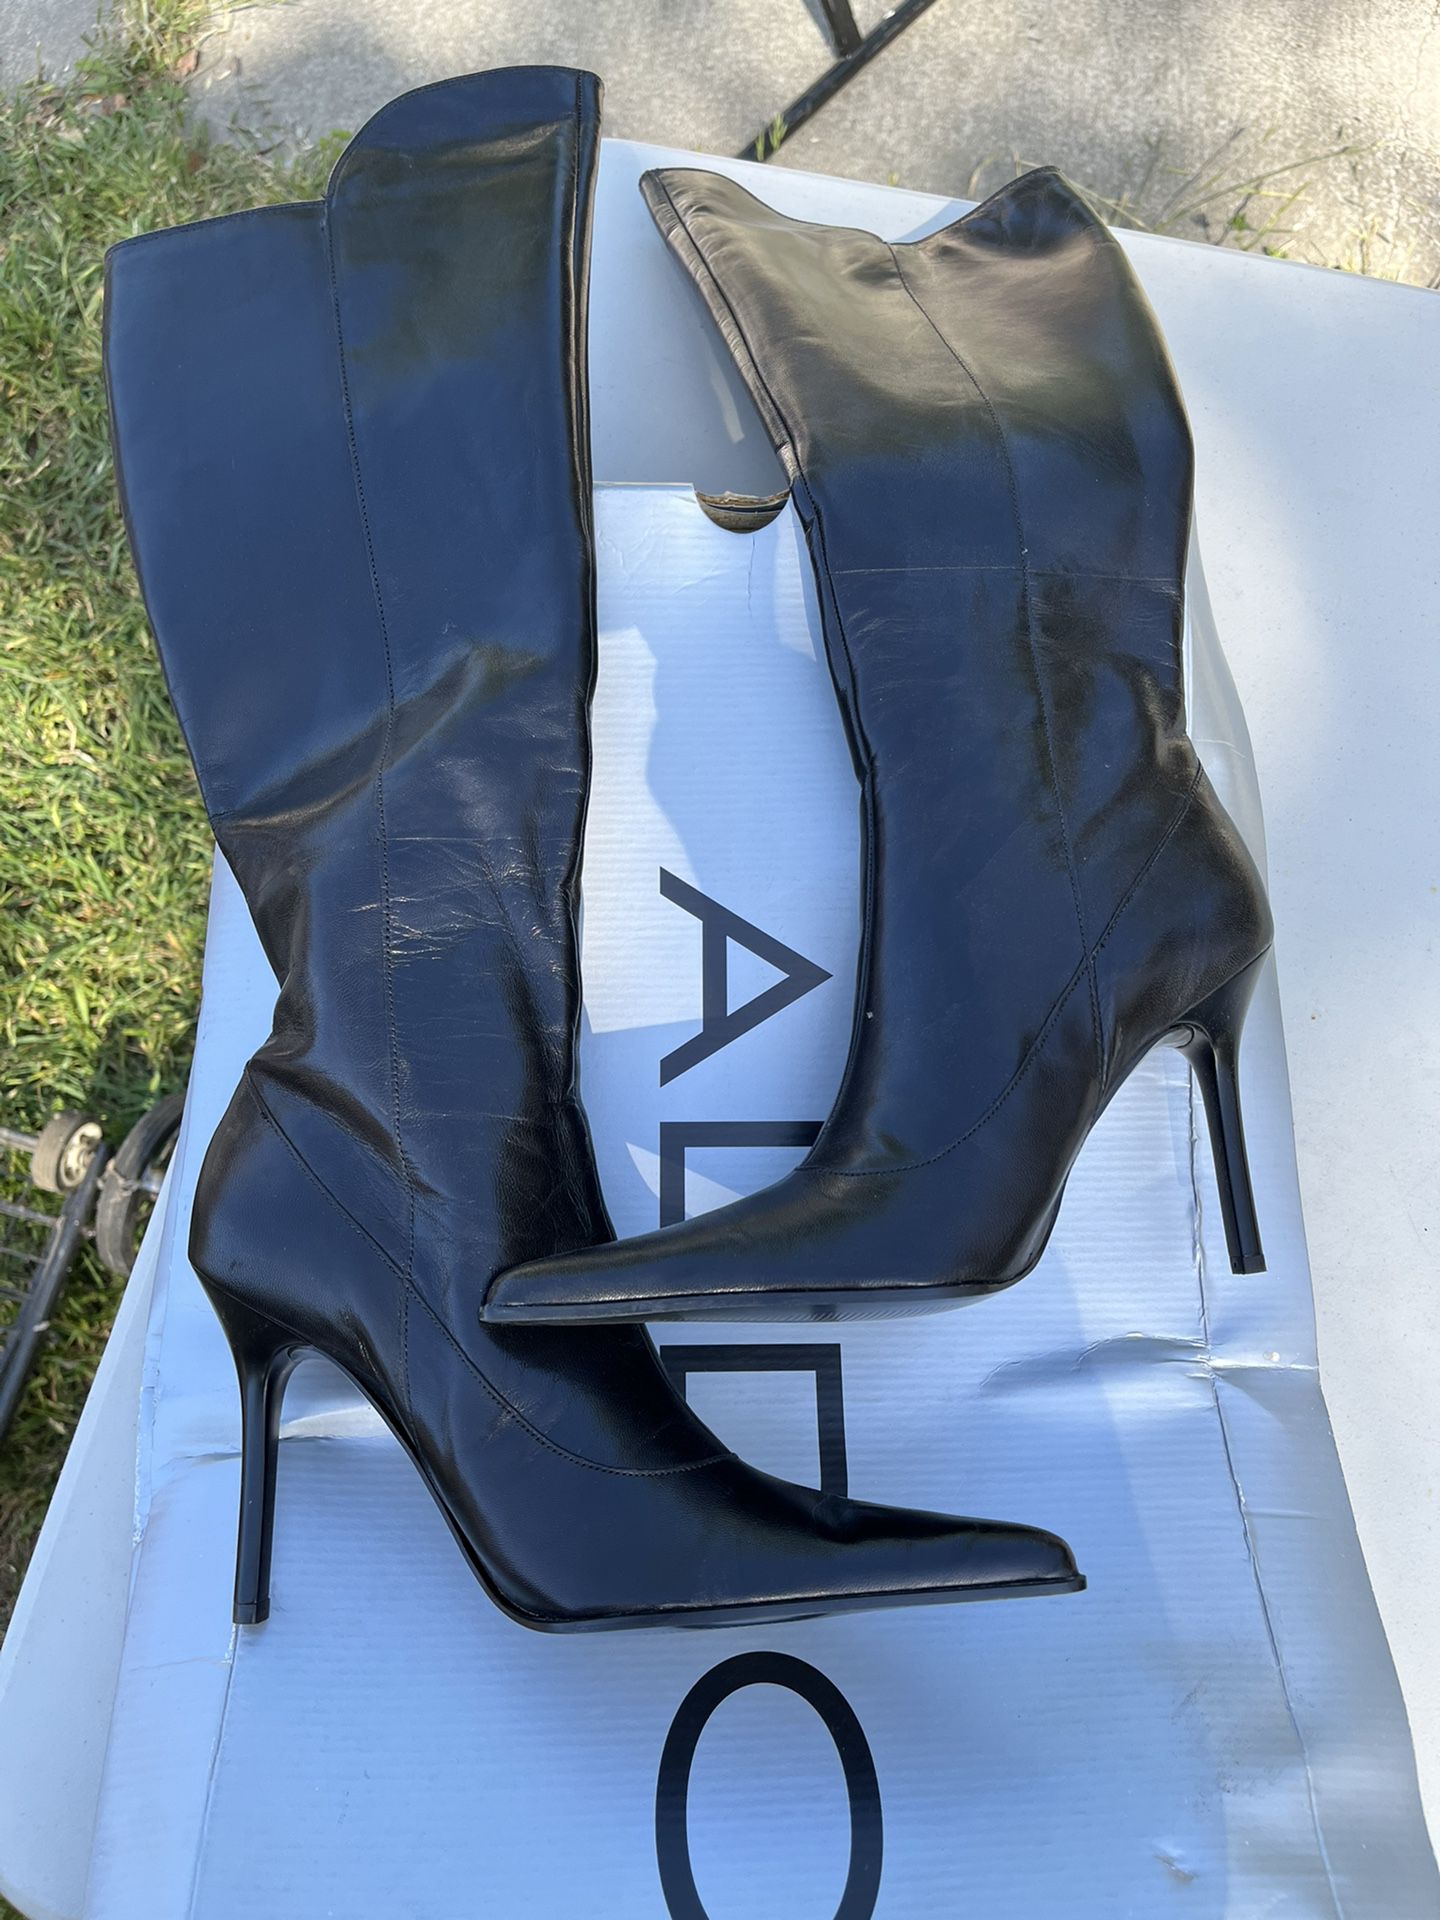  Size 7 ALDO Women’s leather boots